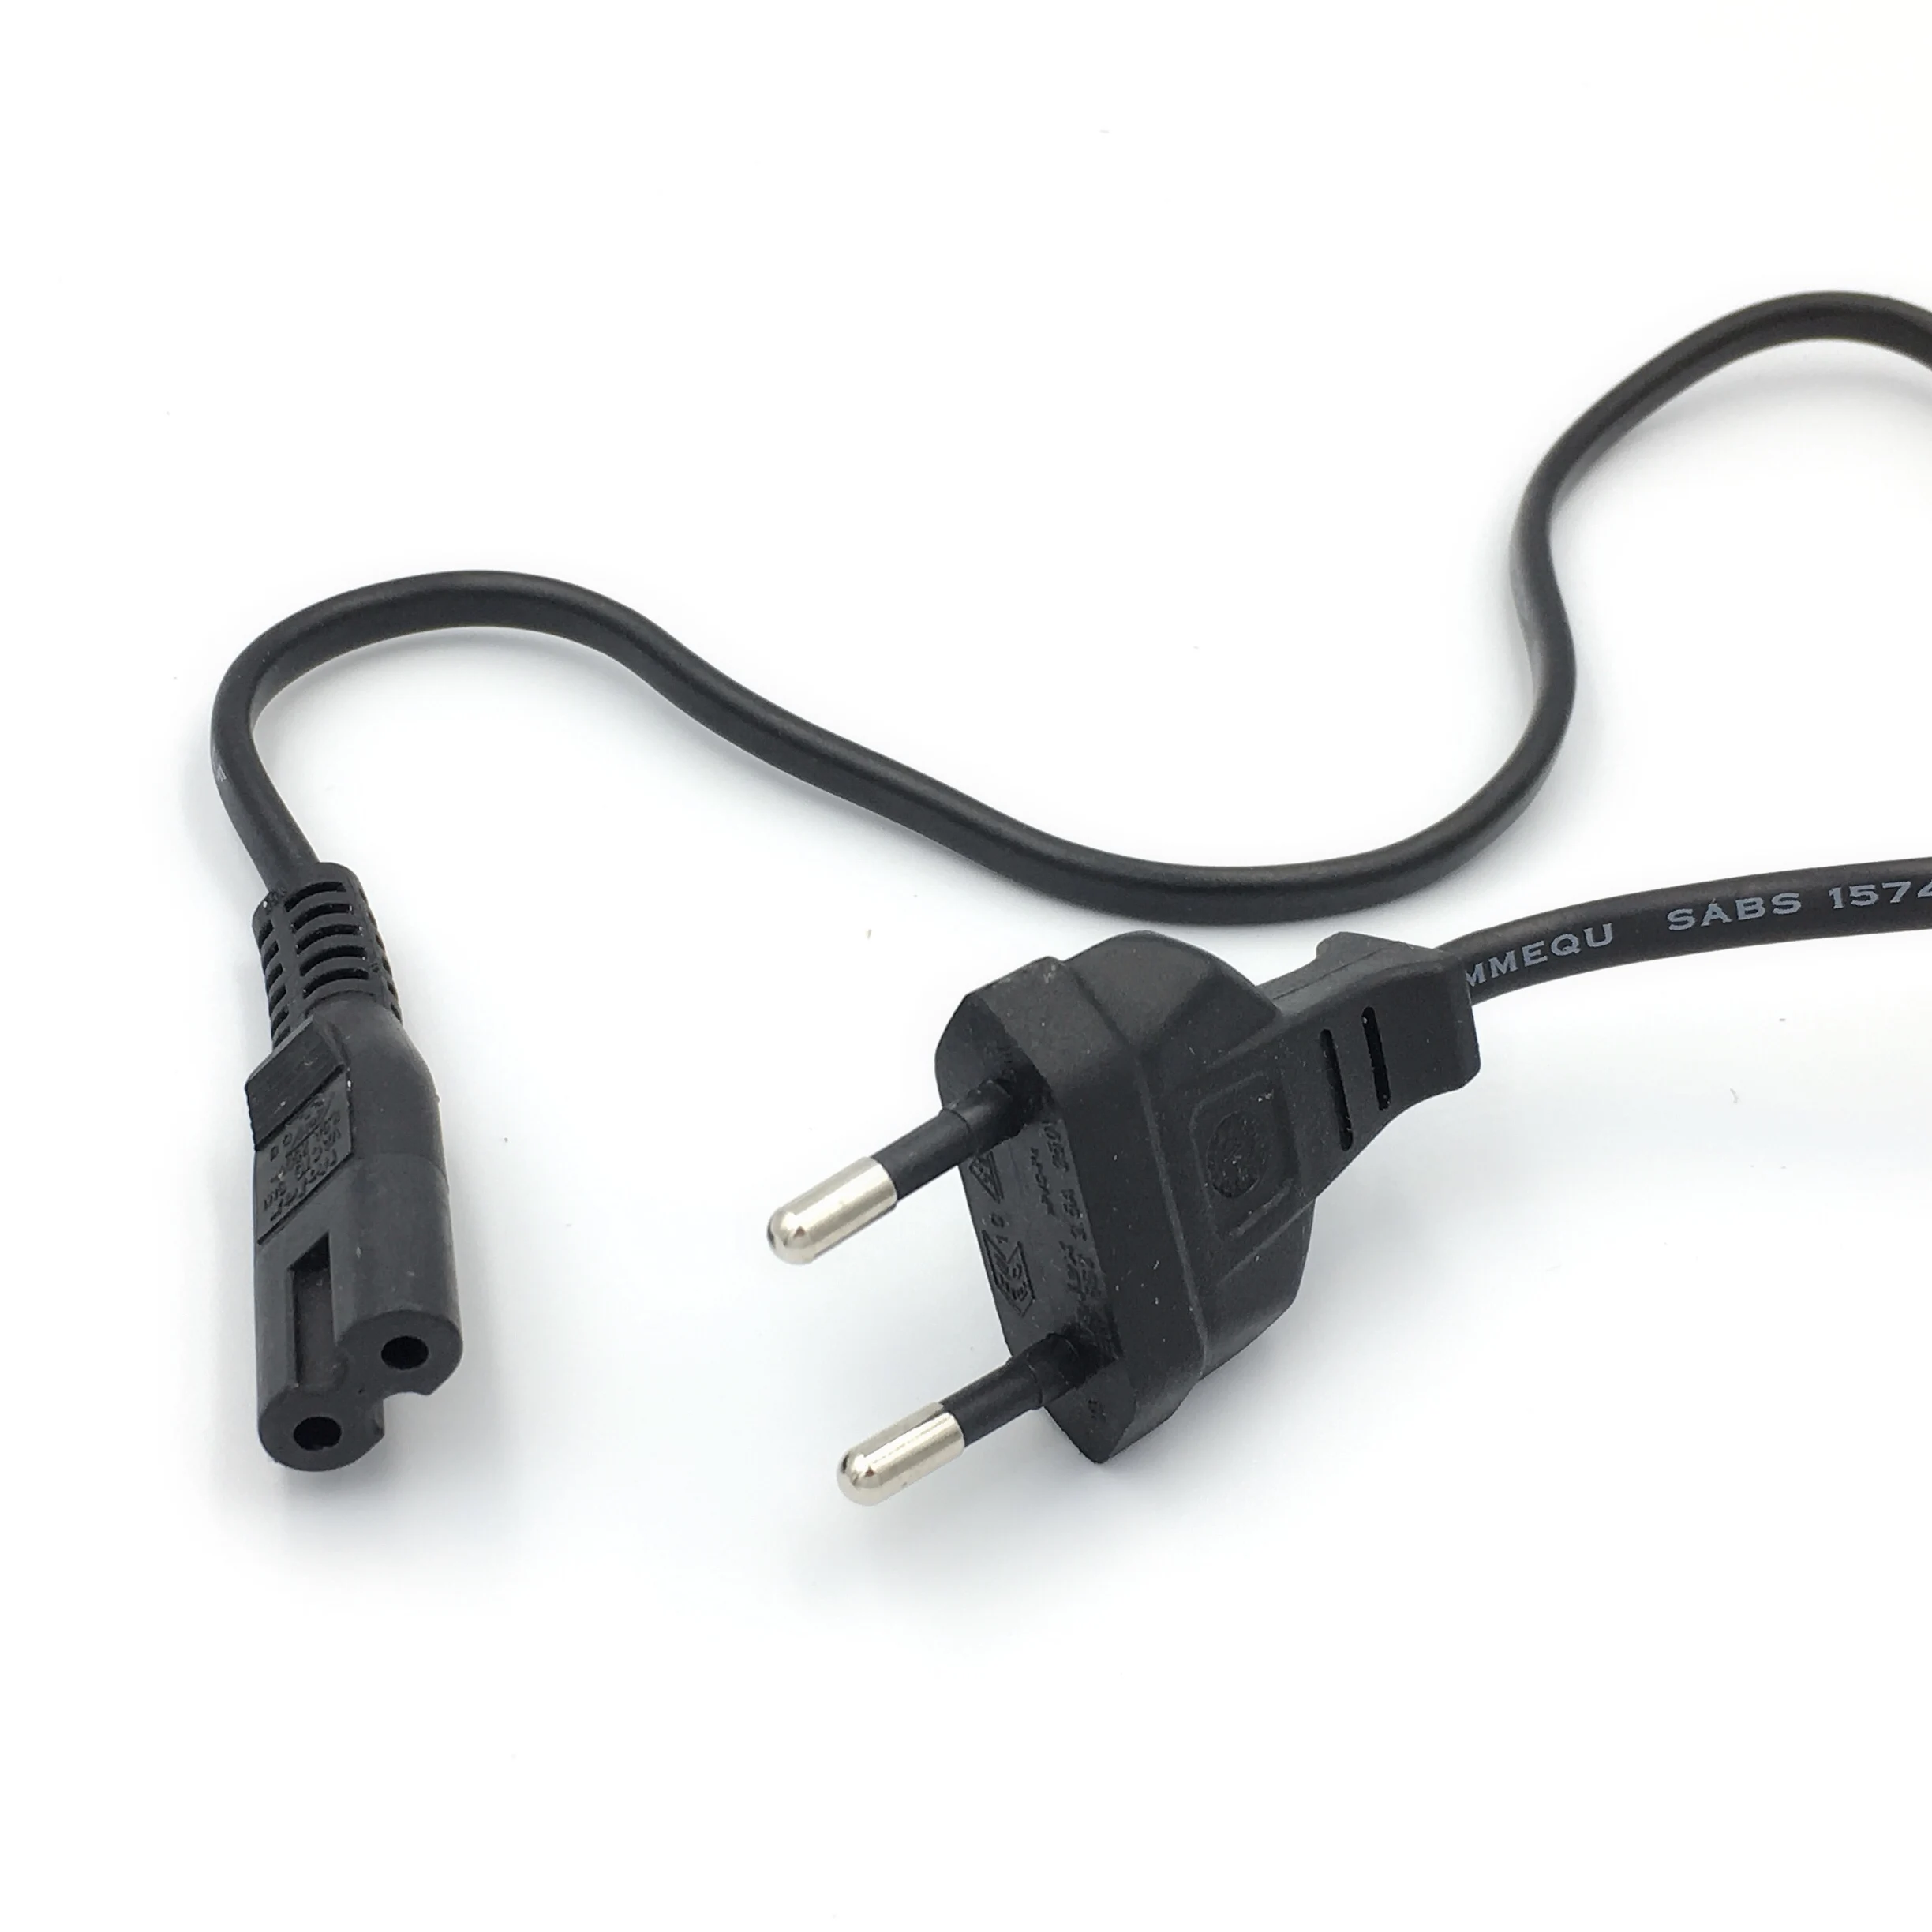 

EU Power cable cord Figure 8 C7 to Euro Eu European 2 pin AC Plug power cable cord for cameras,printers,notebook etc